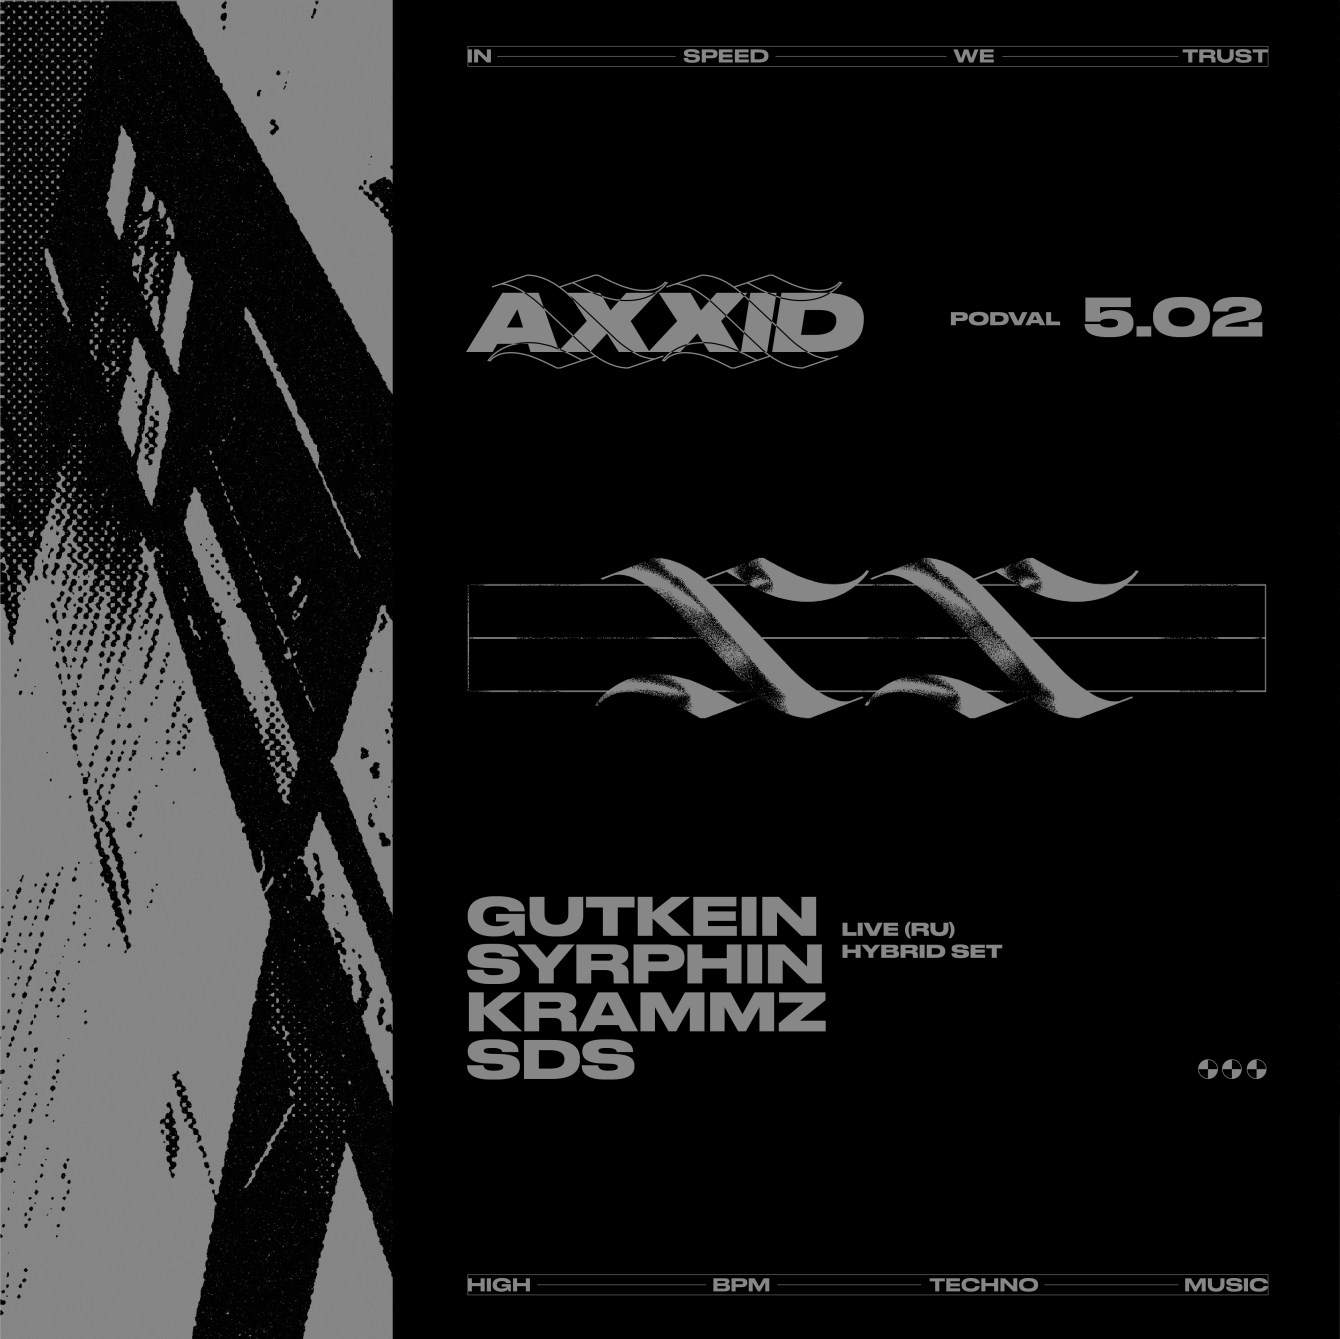 Axxid with Gutkein Live (RU) in Grodno - フライヤー表